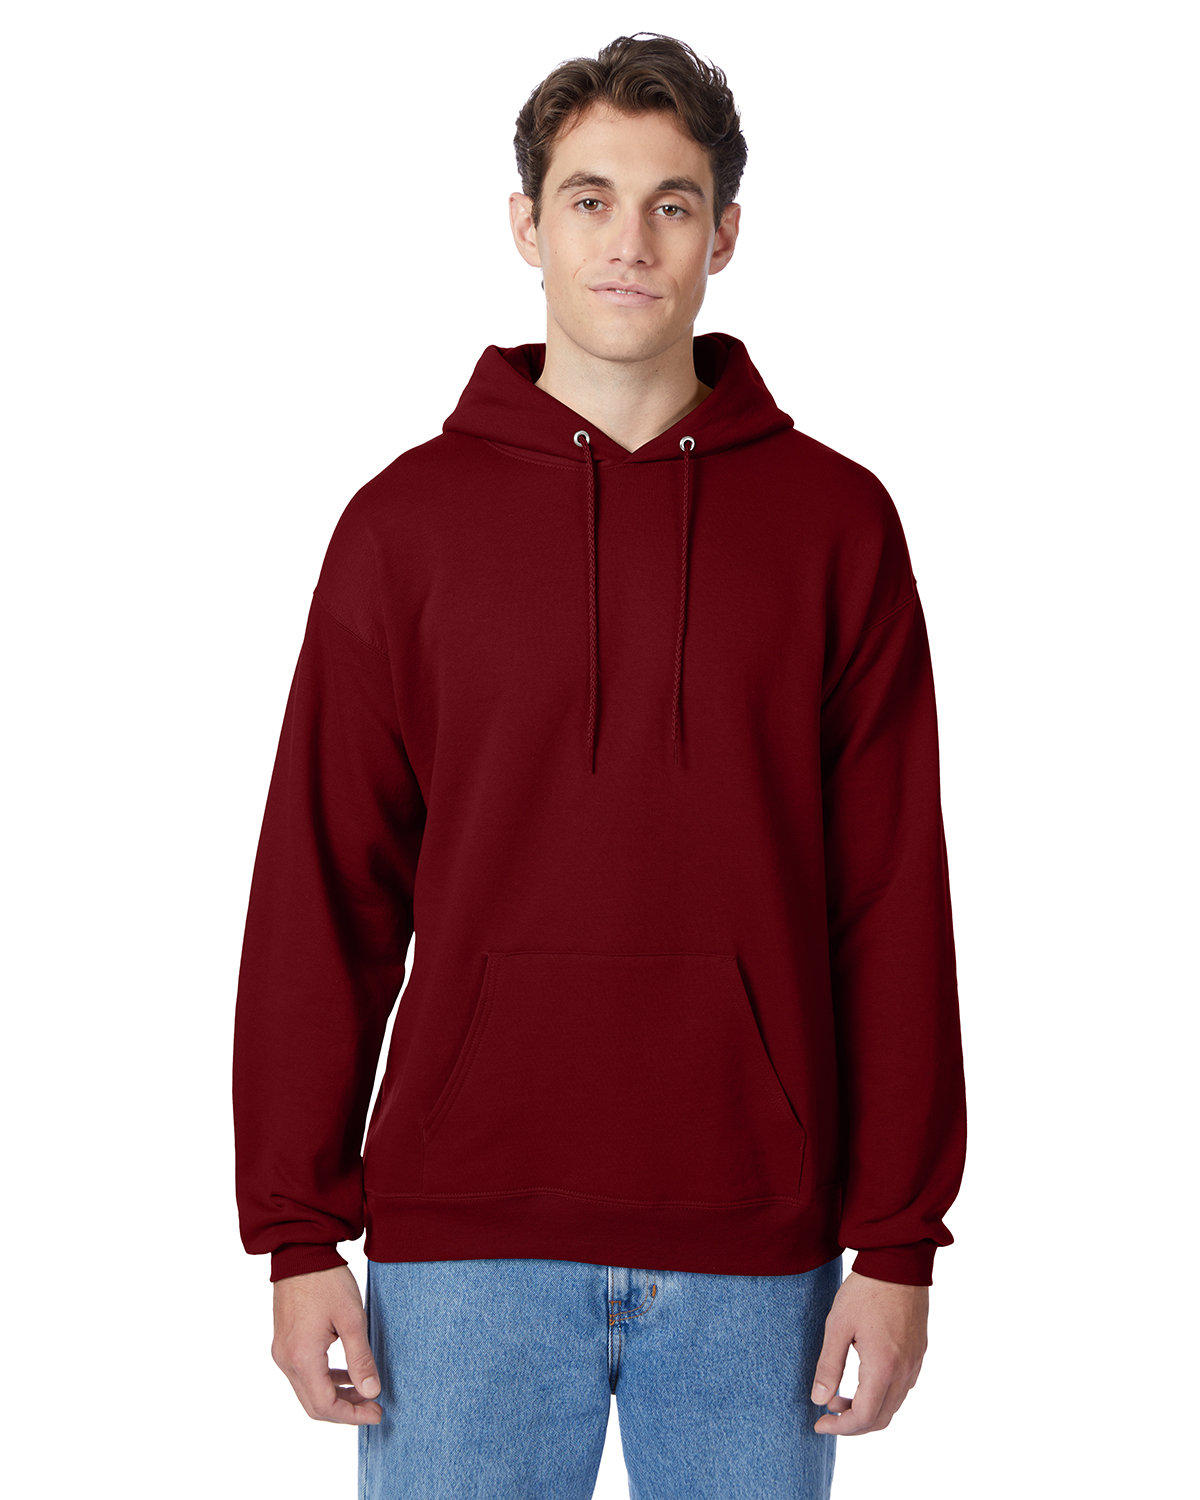 Hanes Hoodie Sweatshirt ComfortBlend EcoSmart Hoody Sweat Shirt